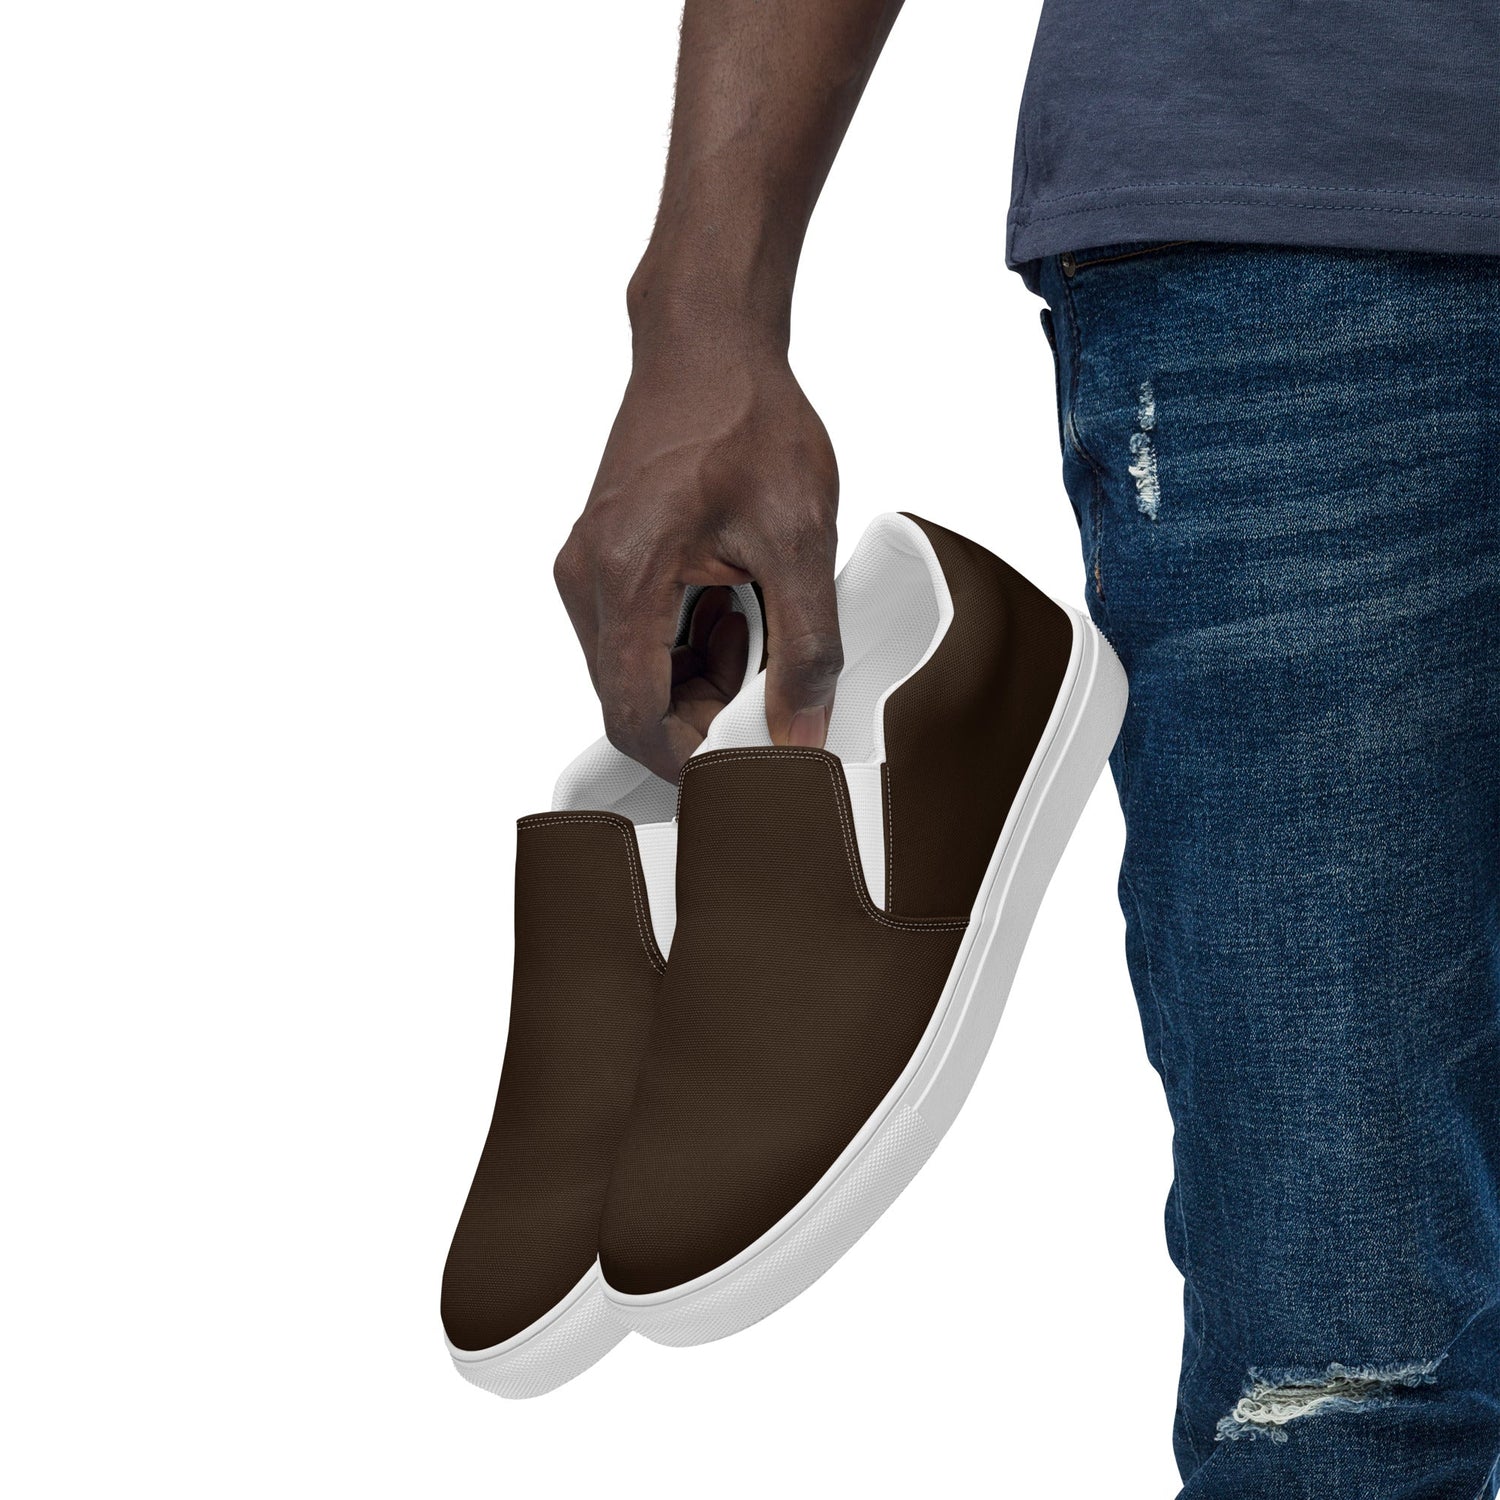 klasneakers Men’s slip-on canvas shoes - Chocolate Cherry